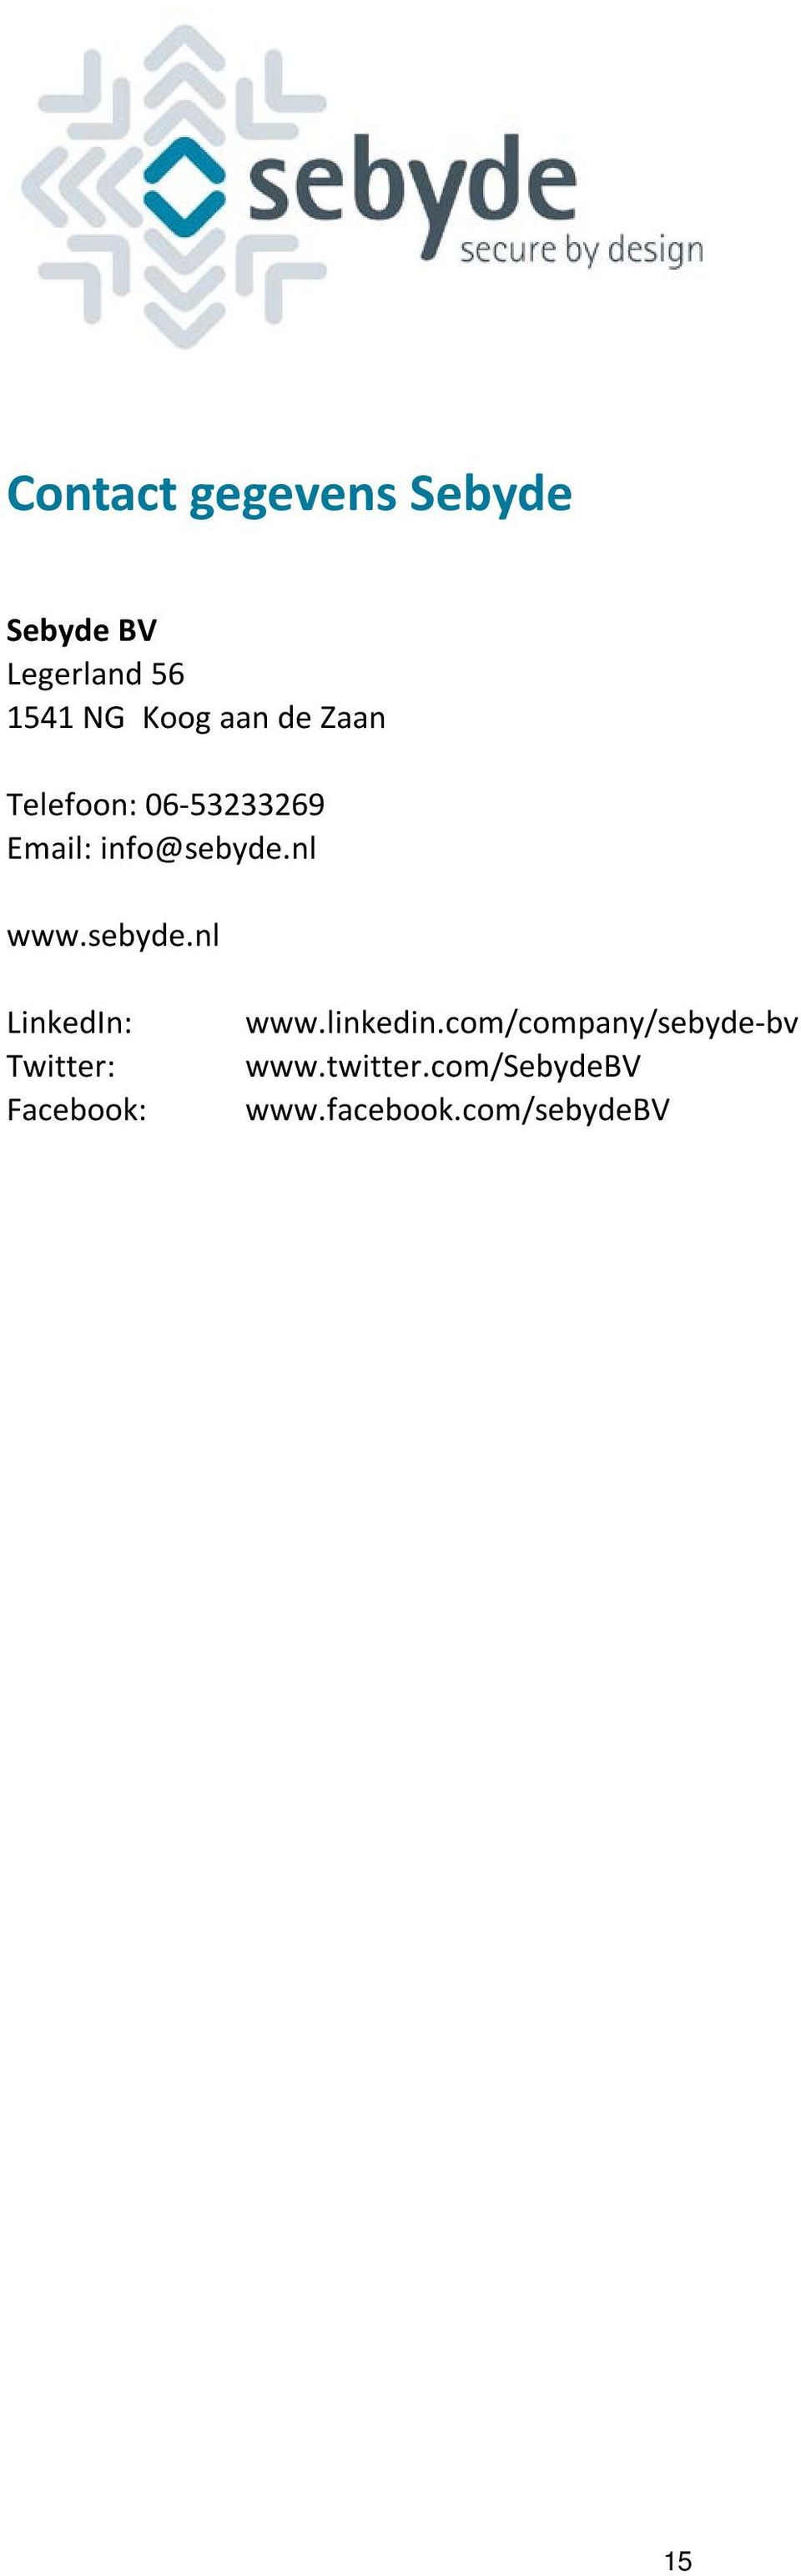 sebyde.nl LinkedIn: Twitter: Facebook: www.linkedin.